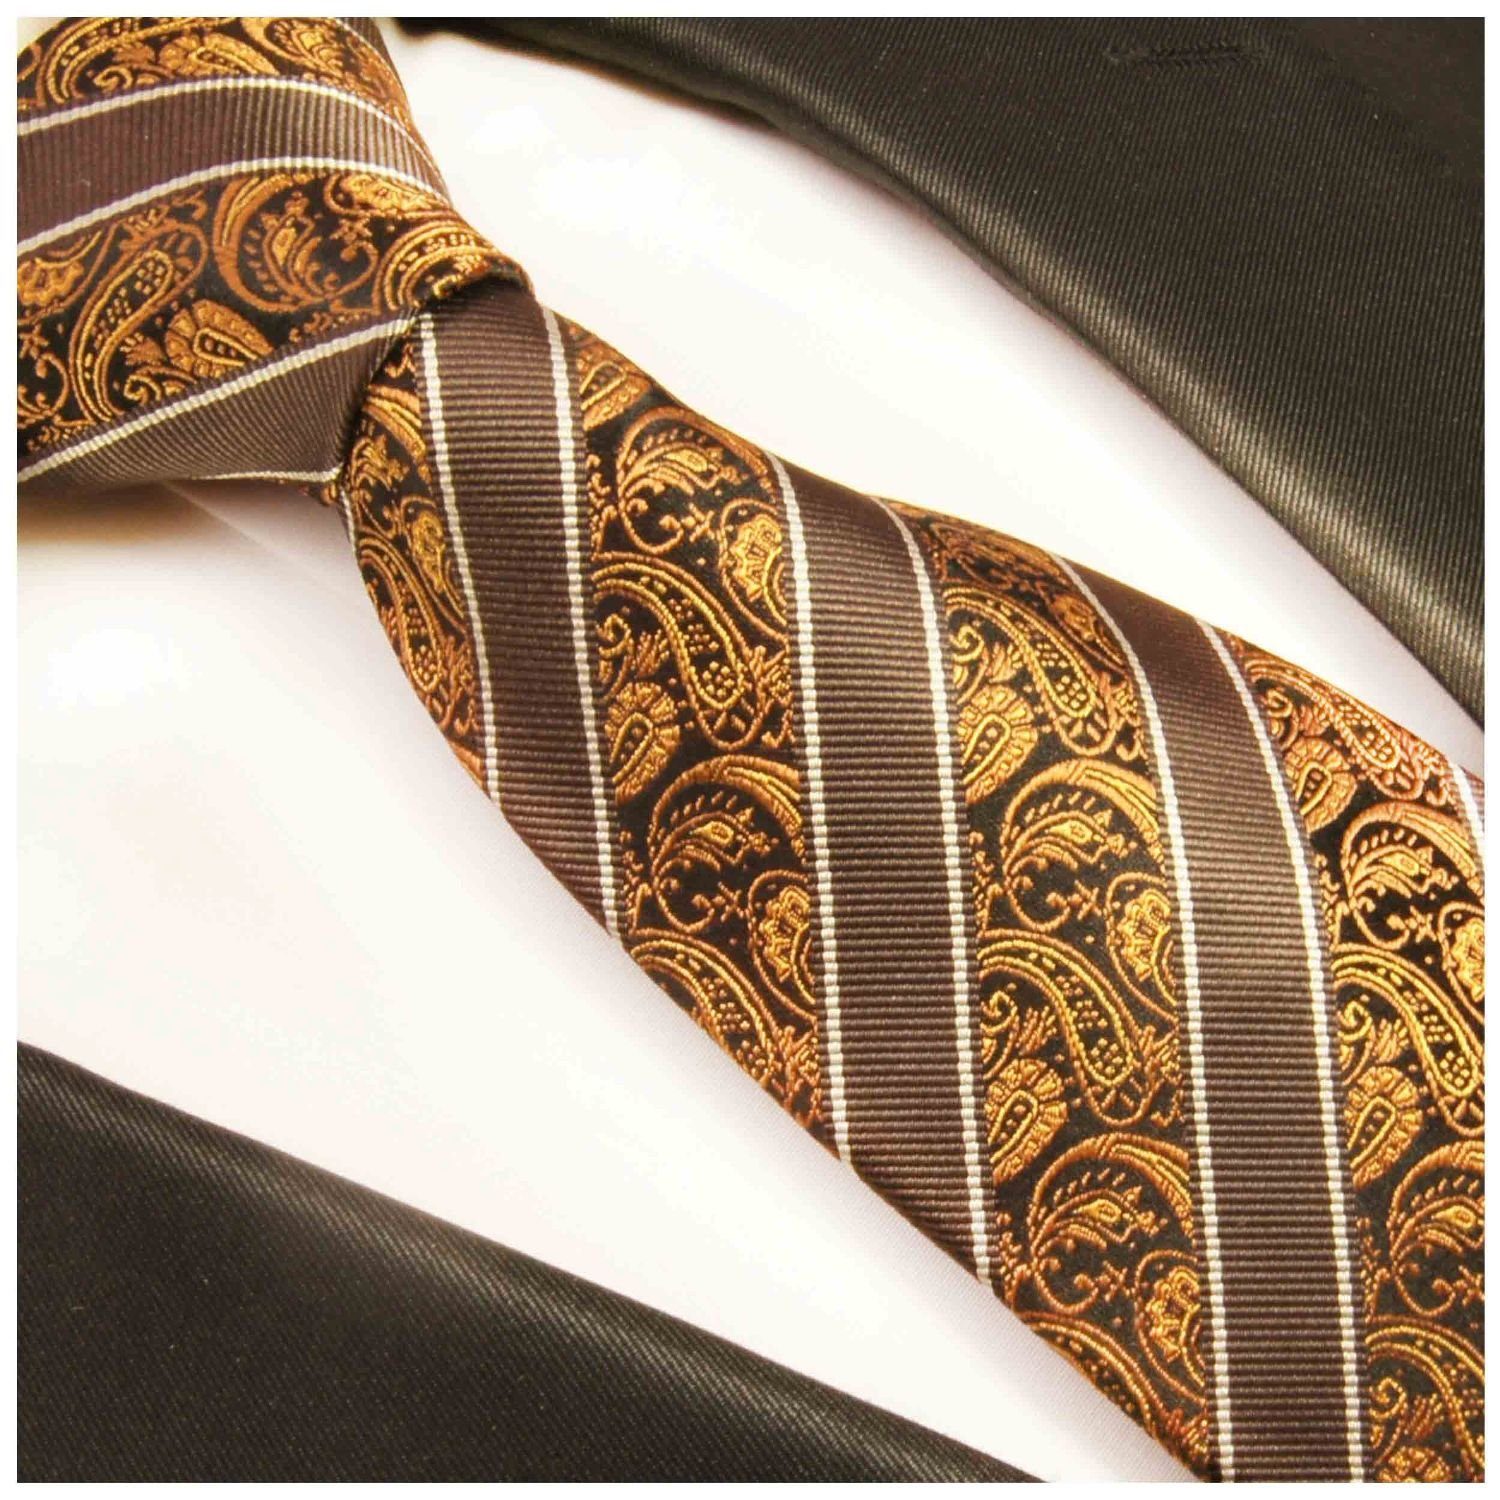 Seide Schmal Herren gestreift Krawatte Schlips paisley Paul 392 100% Elegante Seidenkrawatte Malone (6cm), braun